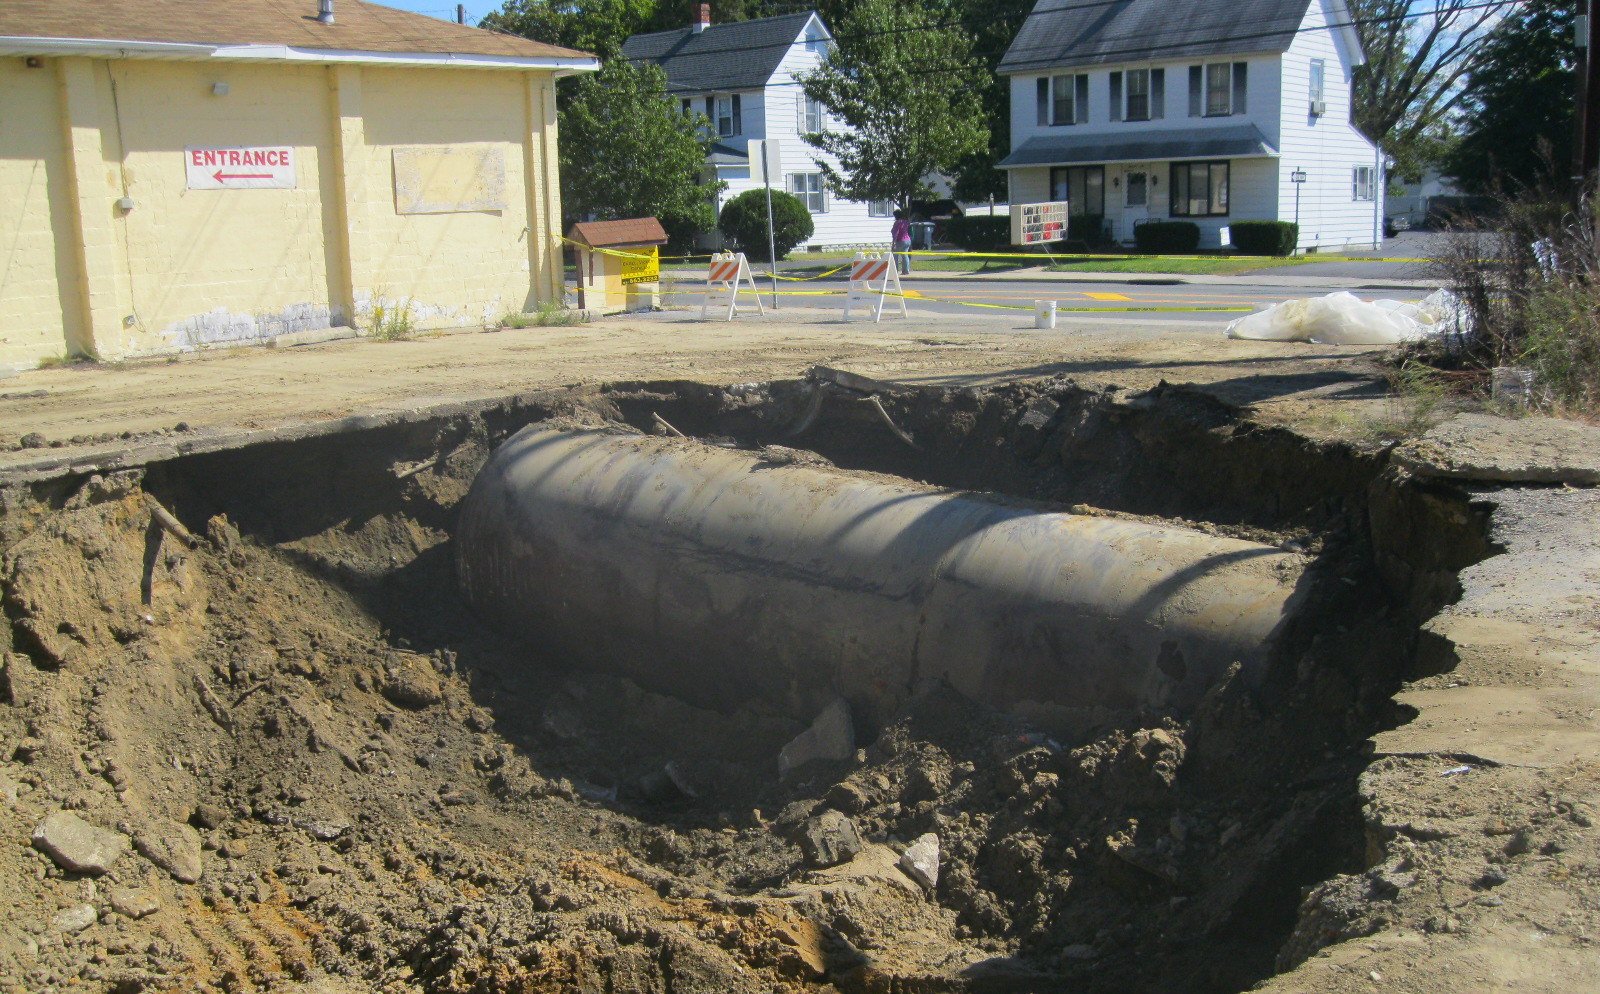 What a buried tank looks like